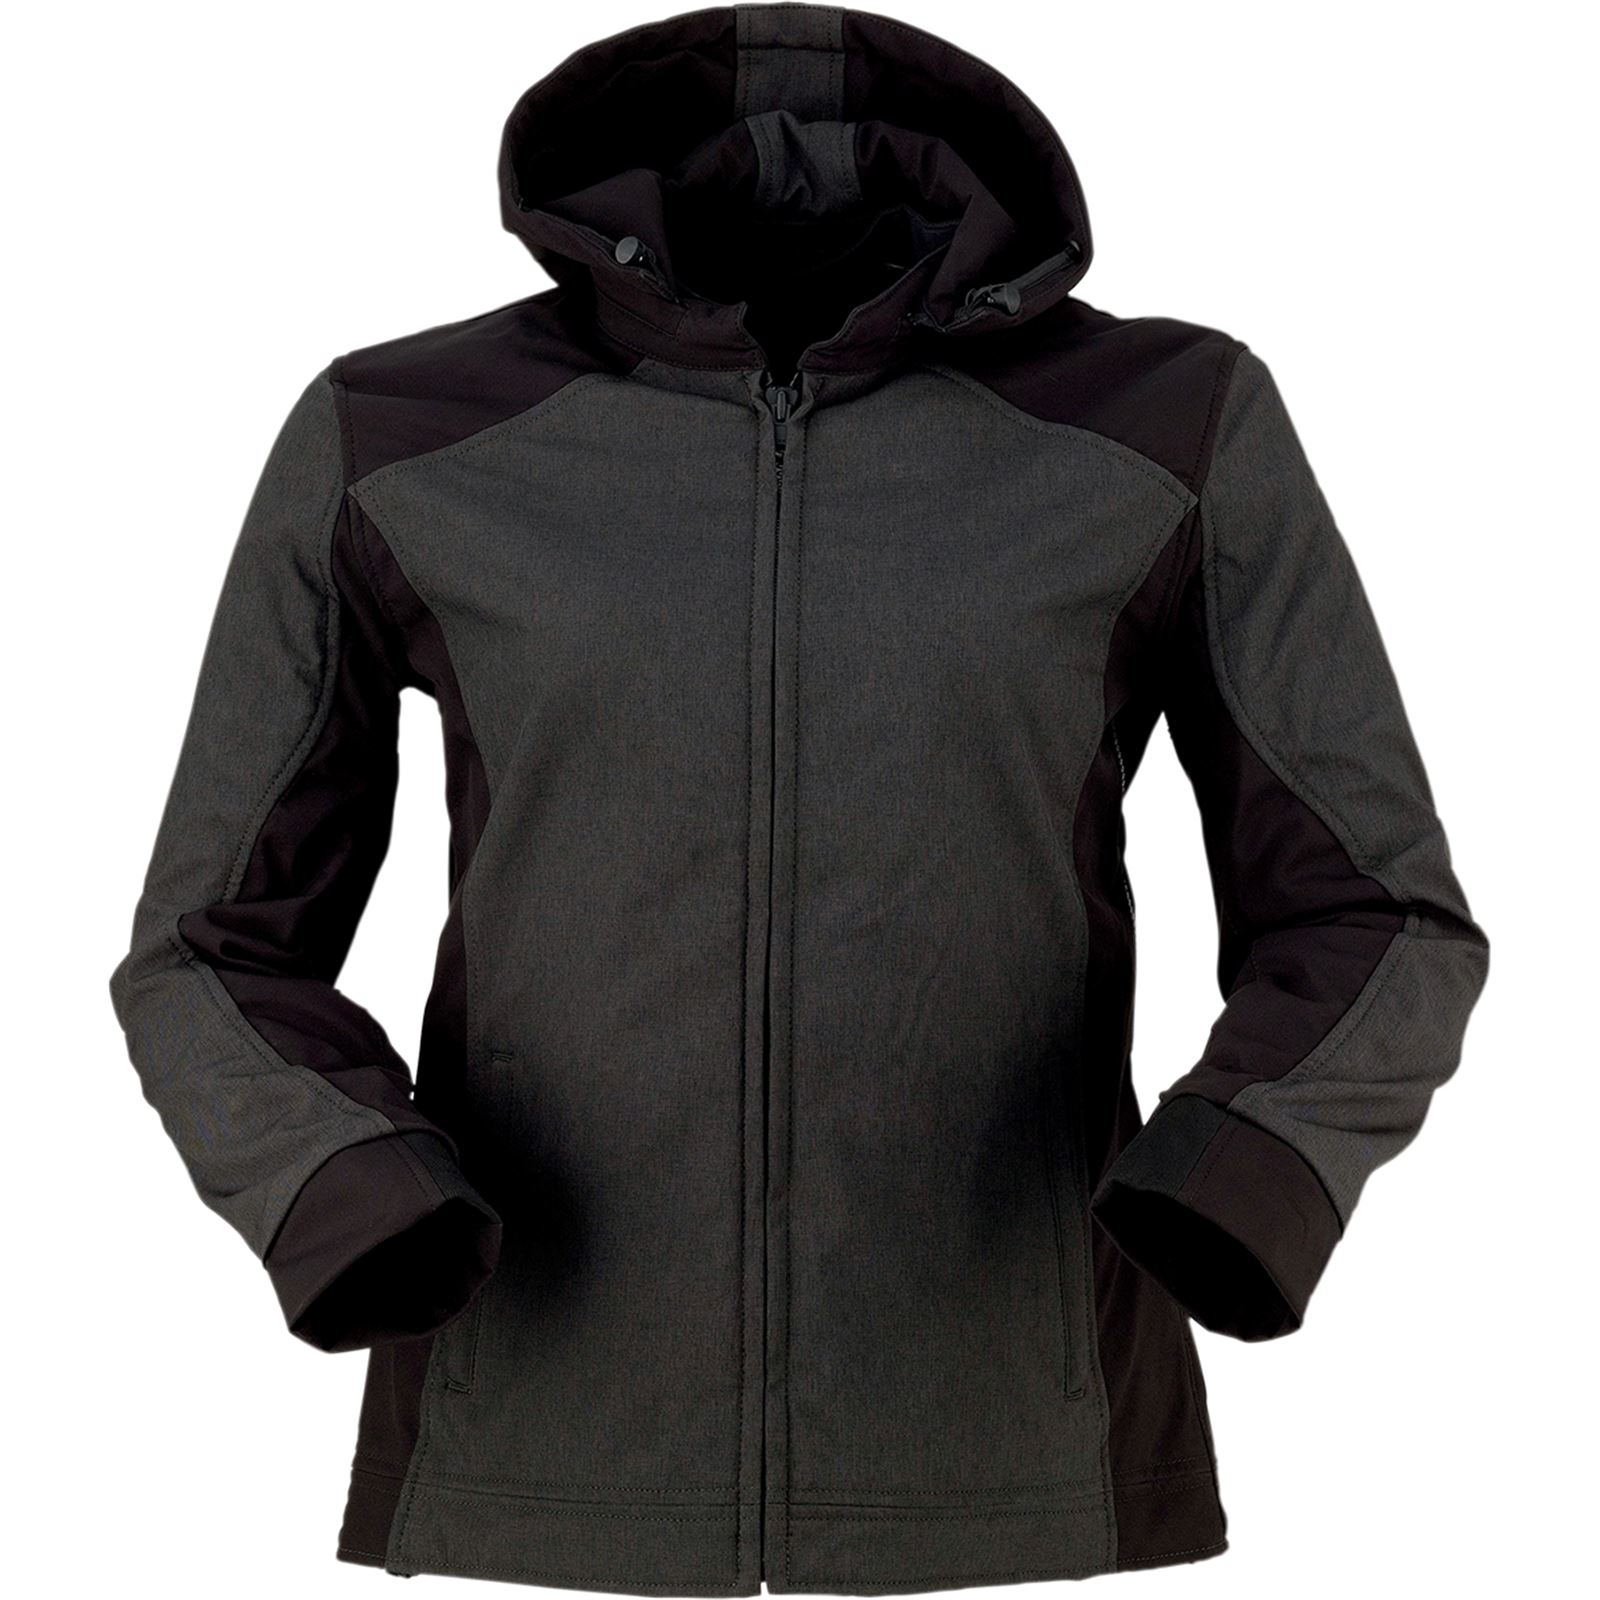 Z1R Women's Battery Jacket - Gray/Black - Medium